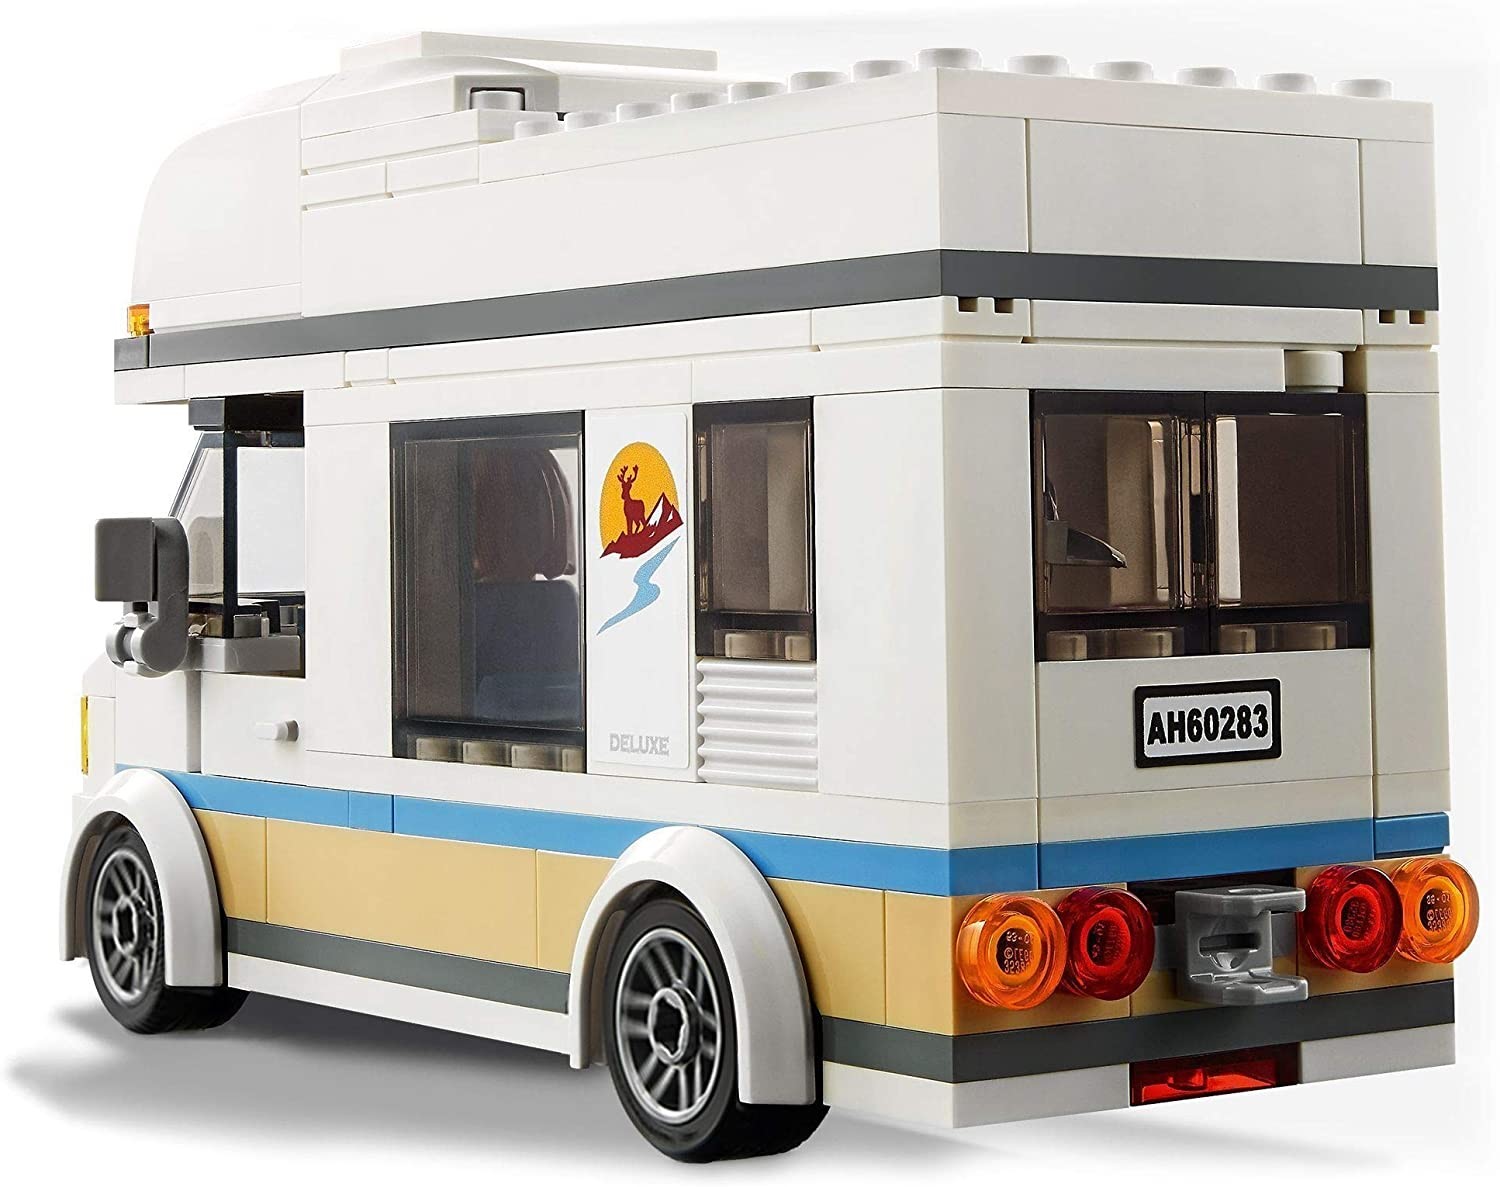 LEGO City 60283 - Ferien-Wohnmobil, Bausatz, 190 Teile